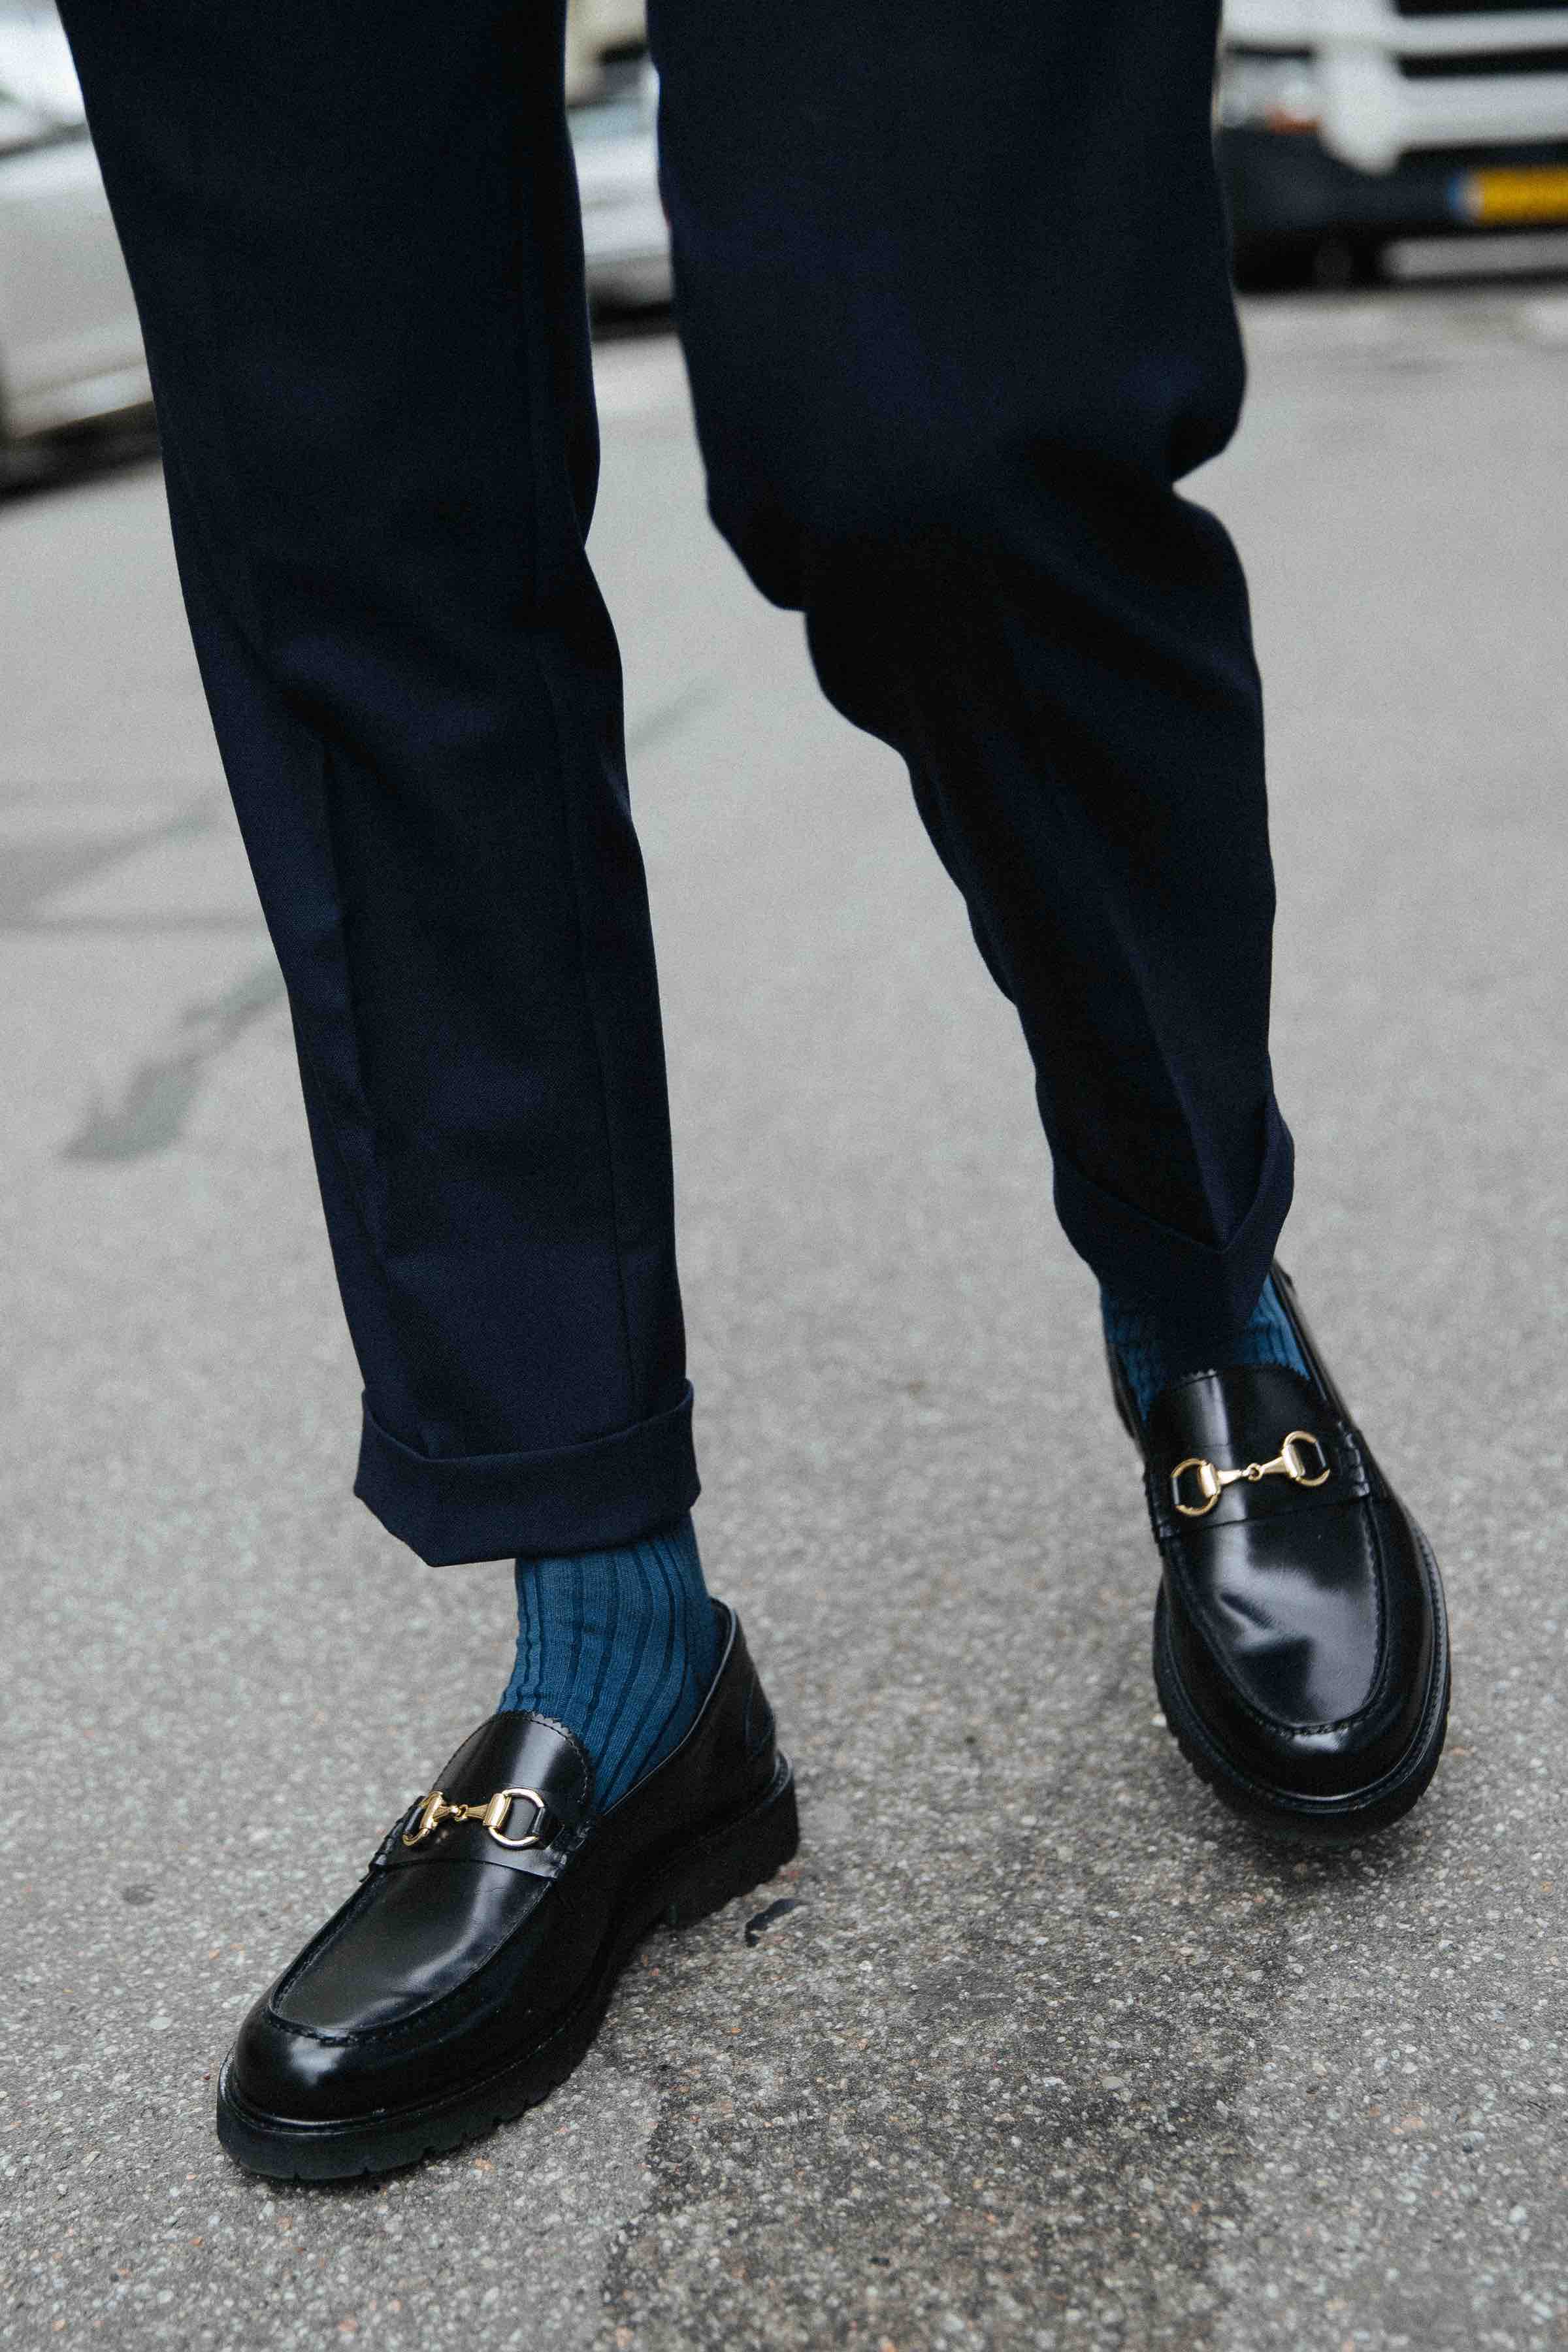 AN IVY Sokker Indigo Blue Ribbed Socks